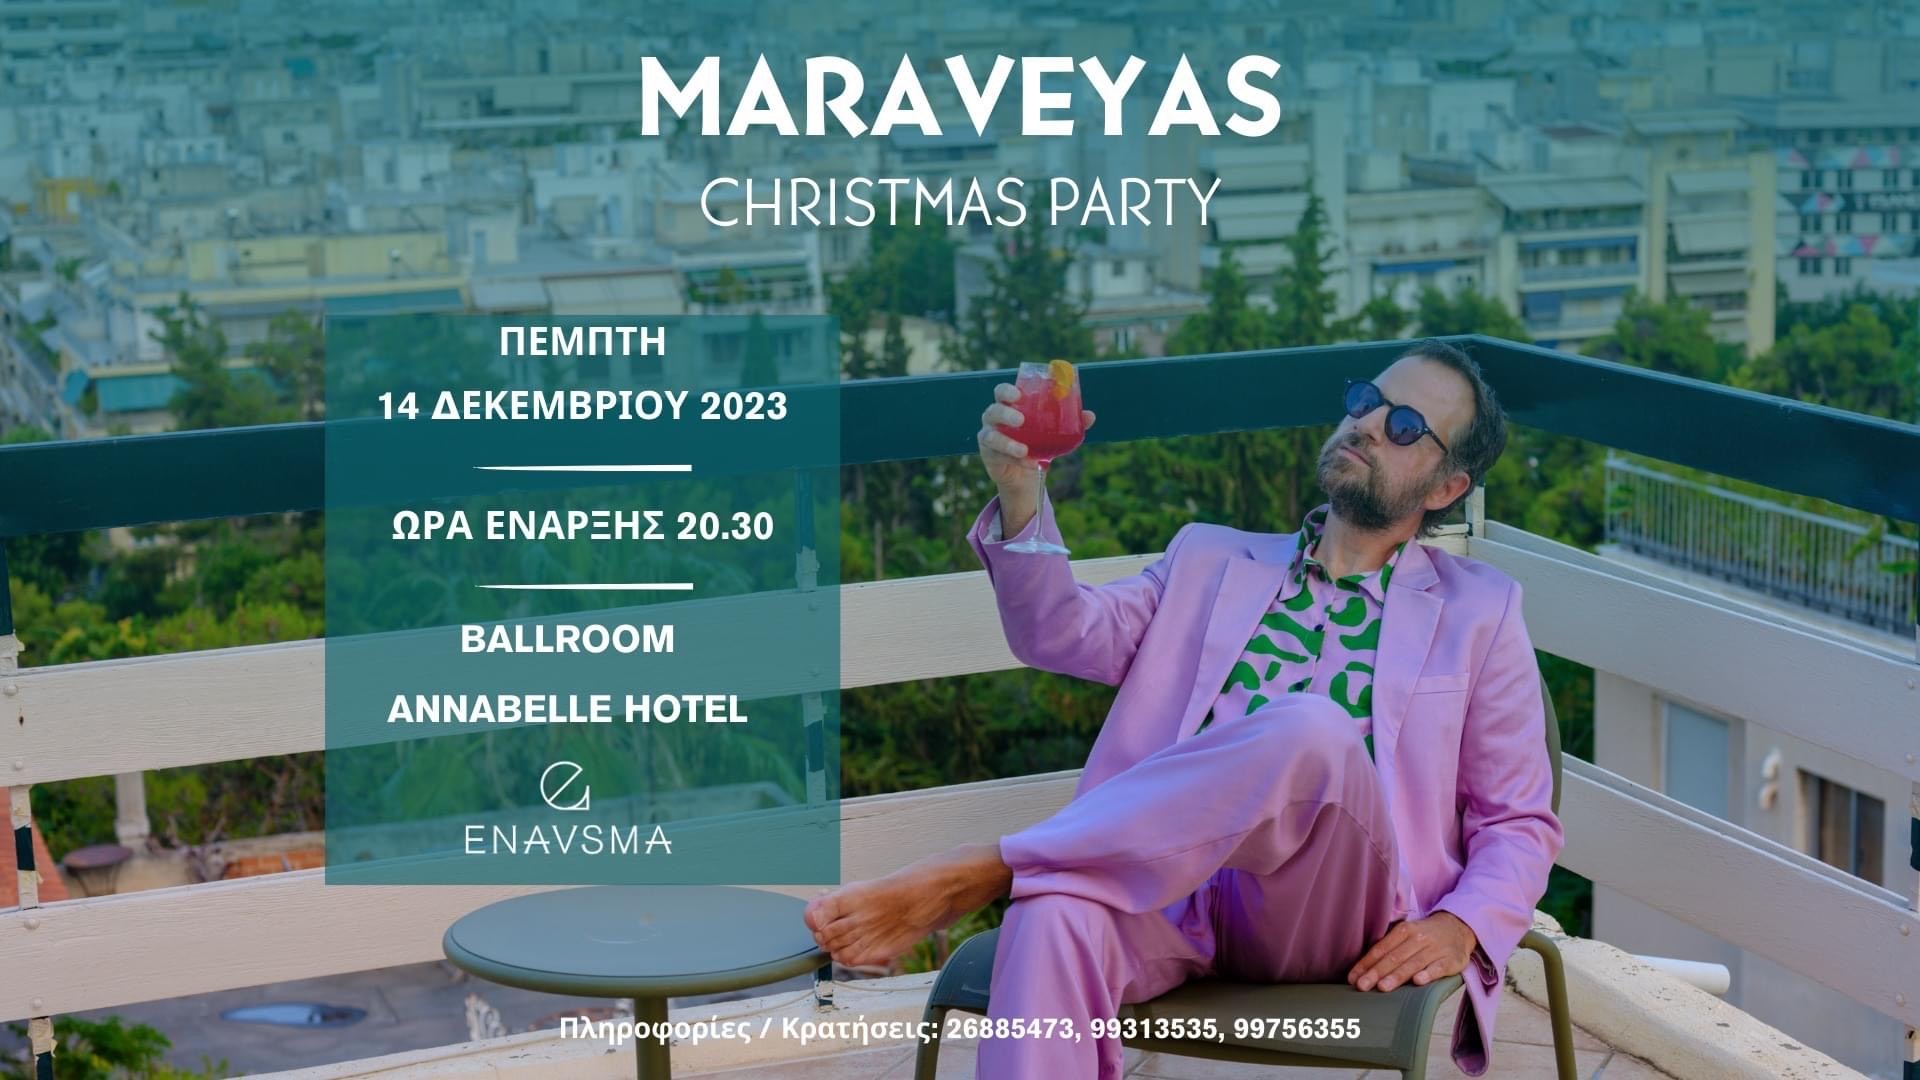 To ίδρυμα ENAVSMA αποχαιρετά το 2023 με ένα μοναδικό χριστουγεννιάτικο πάρτι